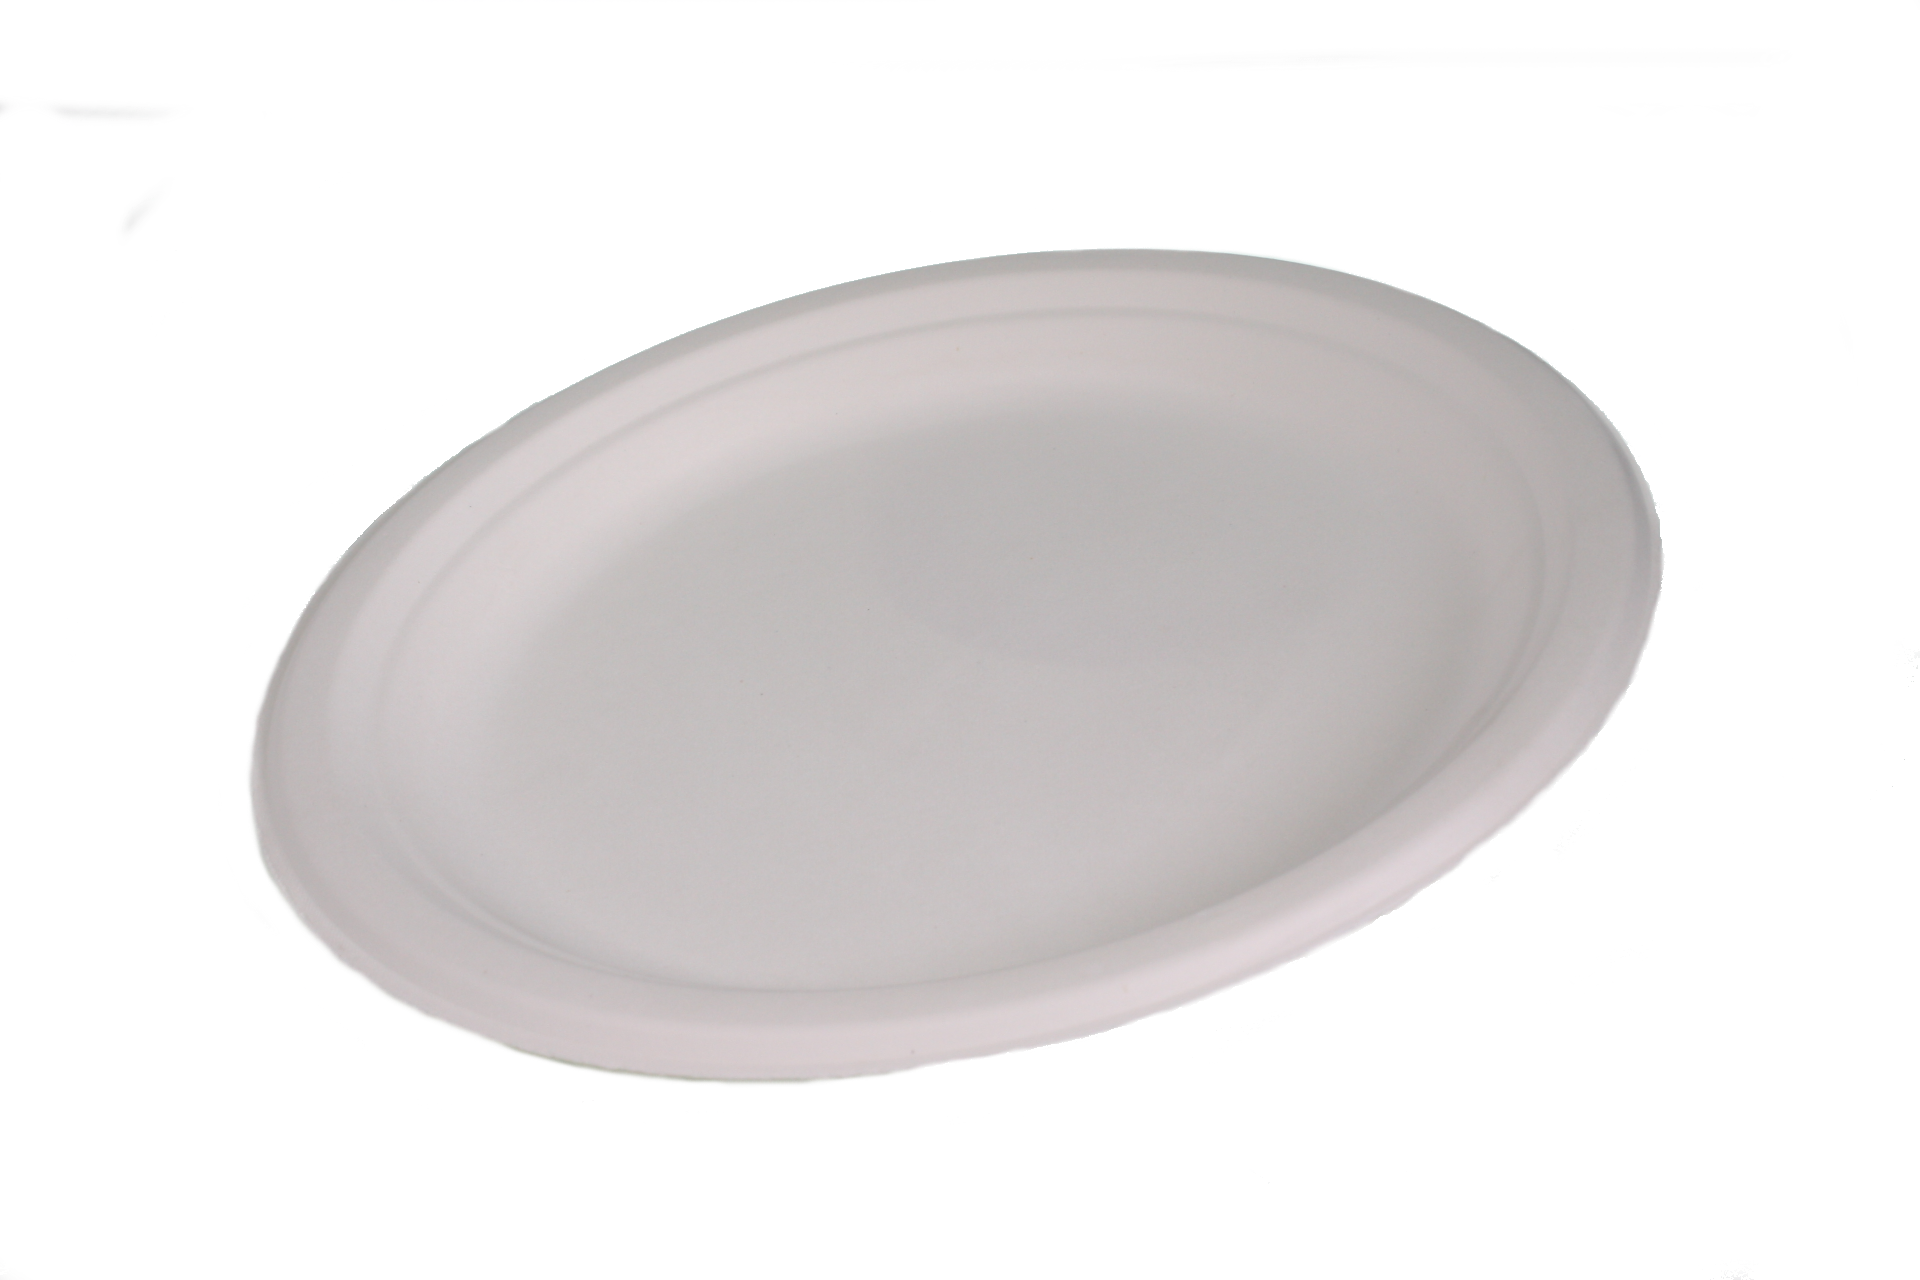 A single biodegradable plate